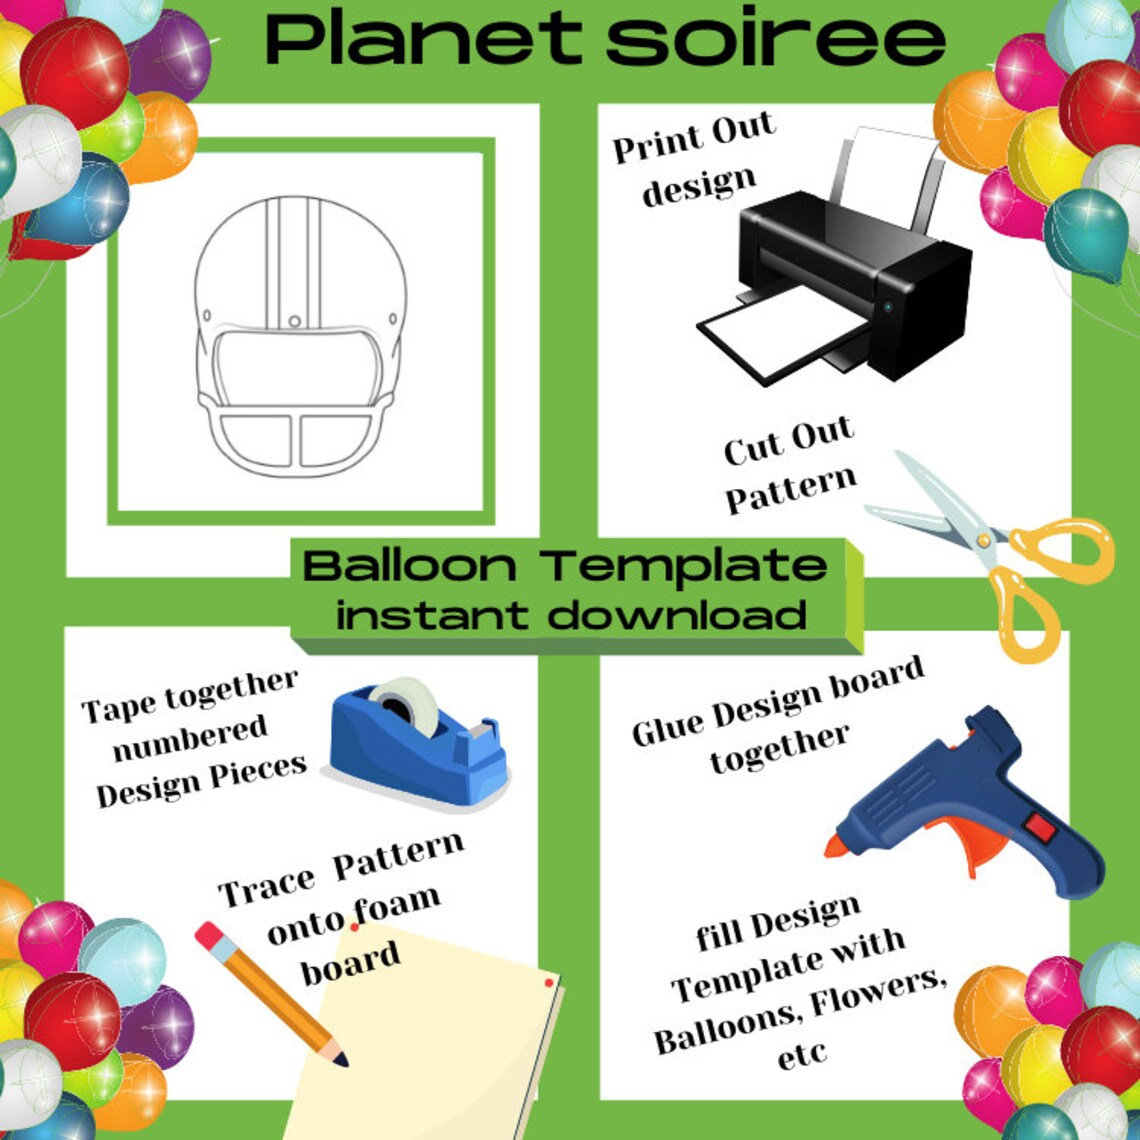 Rugby Template, Football Helmet Mosaic , Mosaic from Balloons, Xmas balloon Mosaic, Holiday Balloon Mosaic, Digital Design, Instant Download